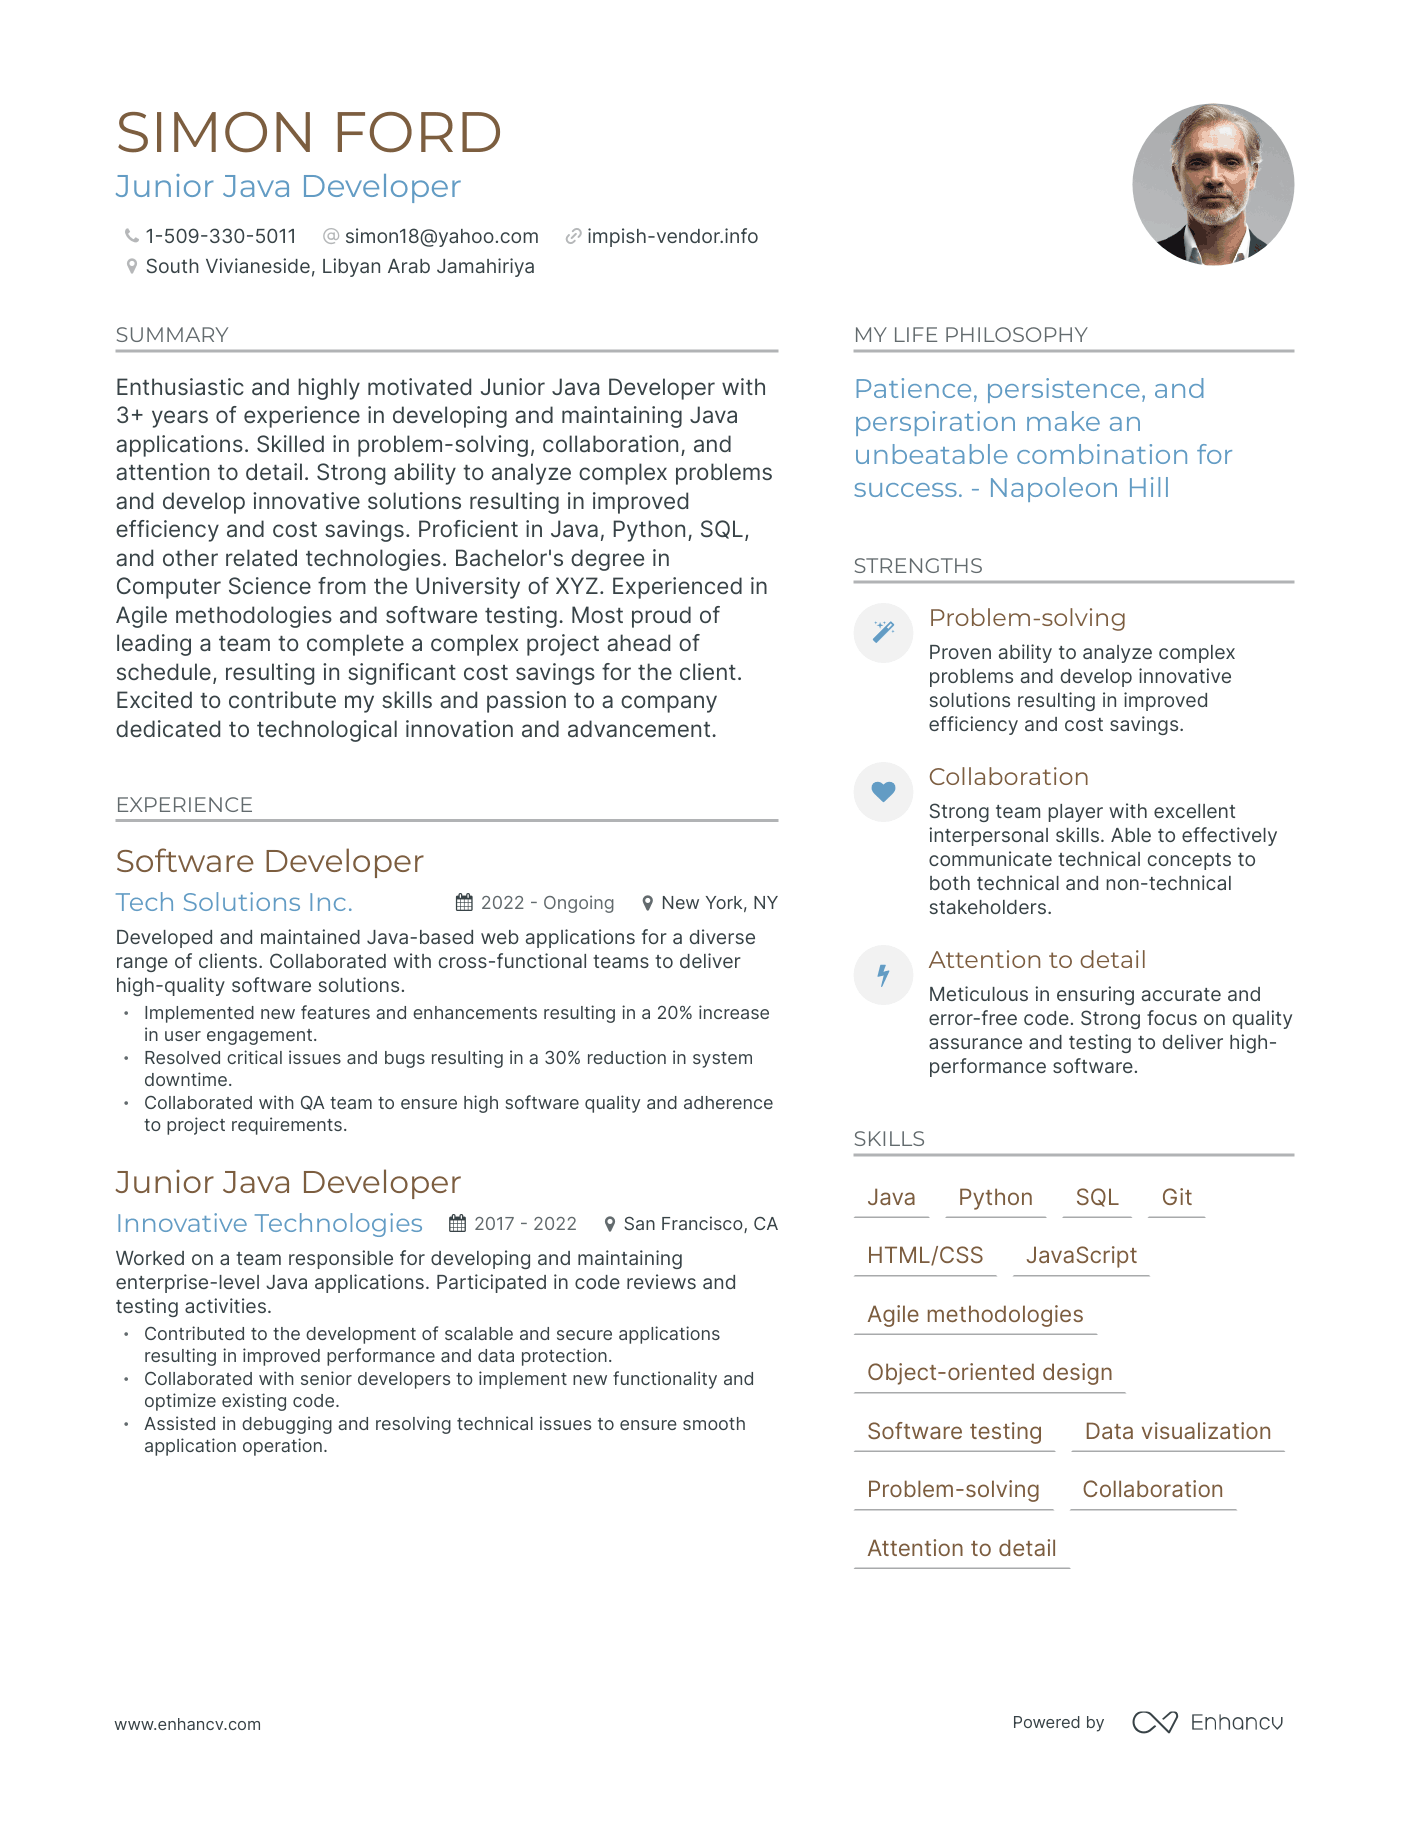 Junior Java Developer resume example